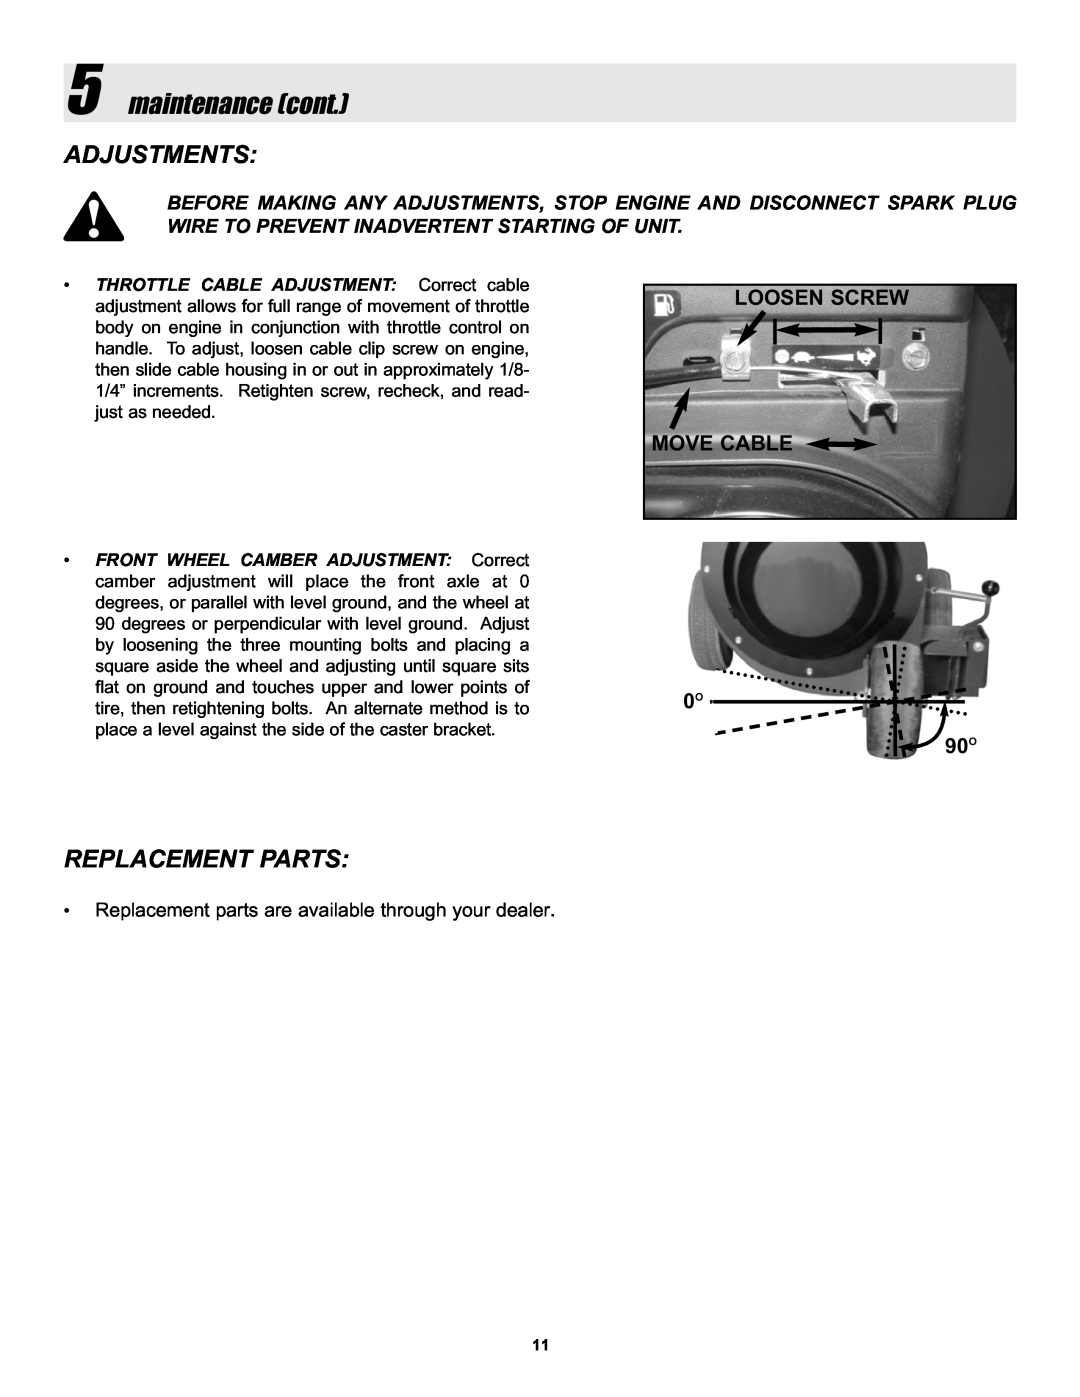 Snapper ELBX10152BV manual maintenance cont, Adjustments, Replacement Parts, Loosen Screw Move Cable 